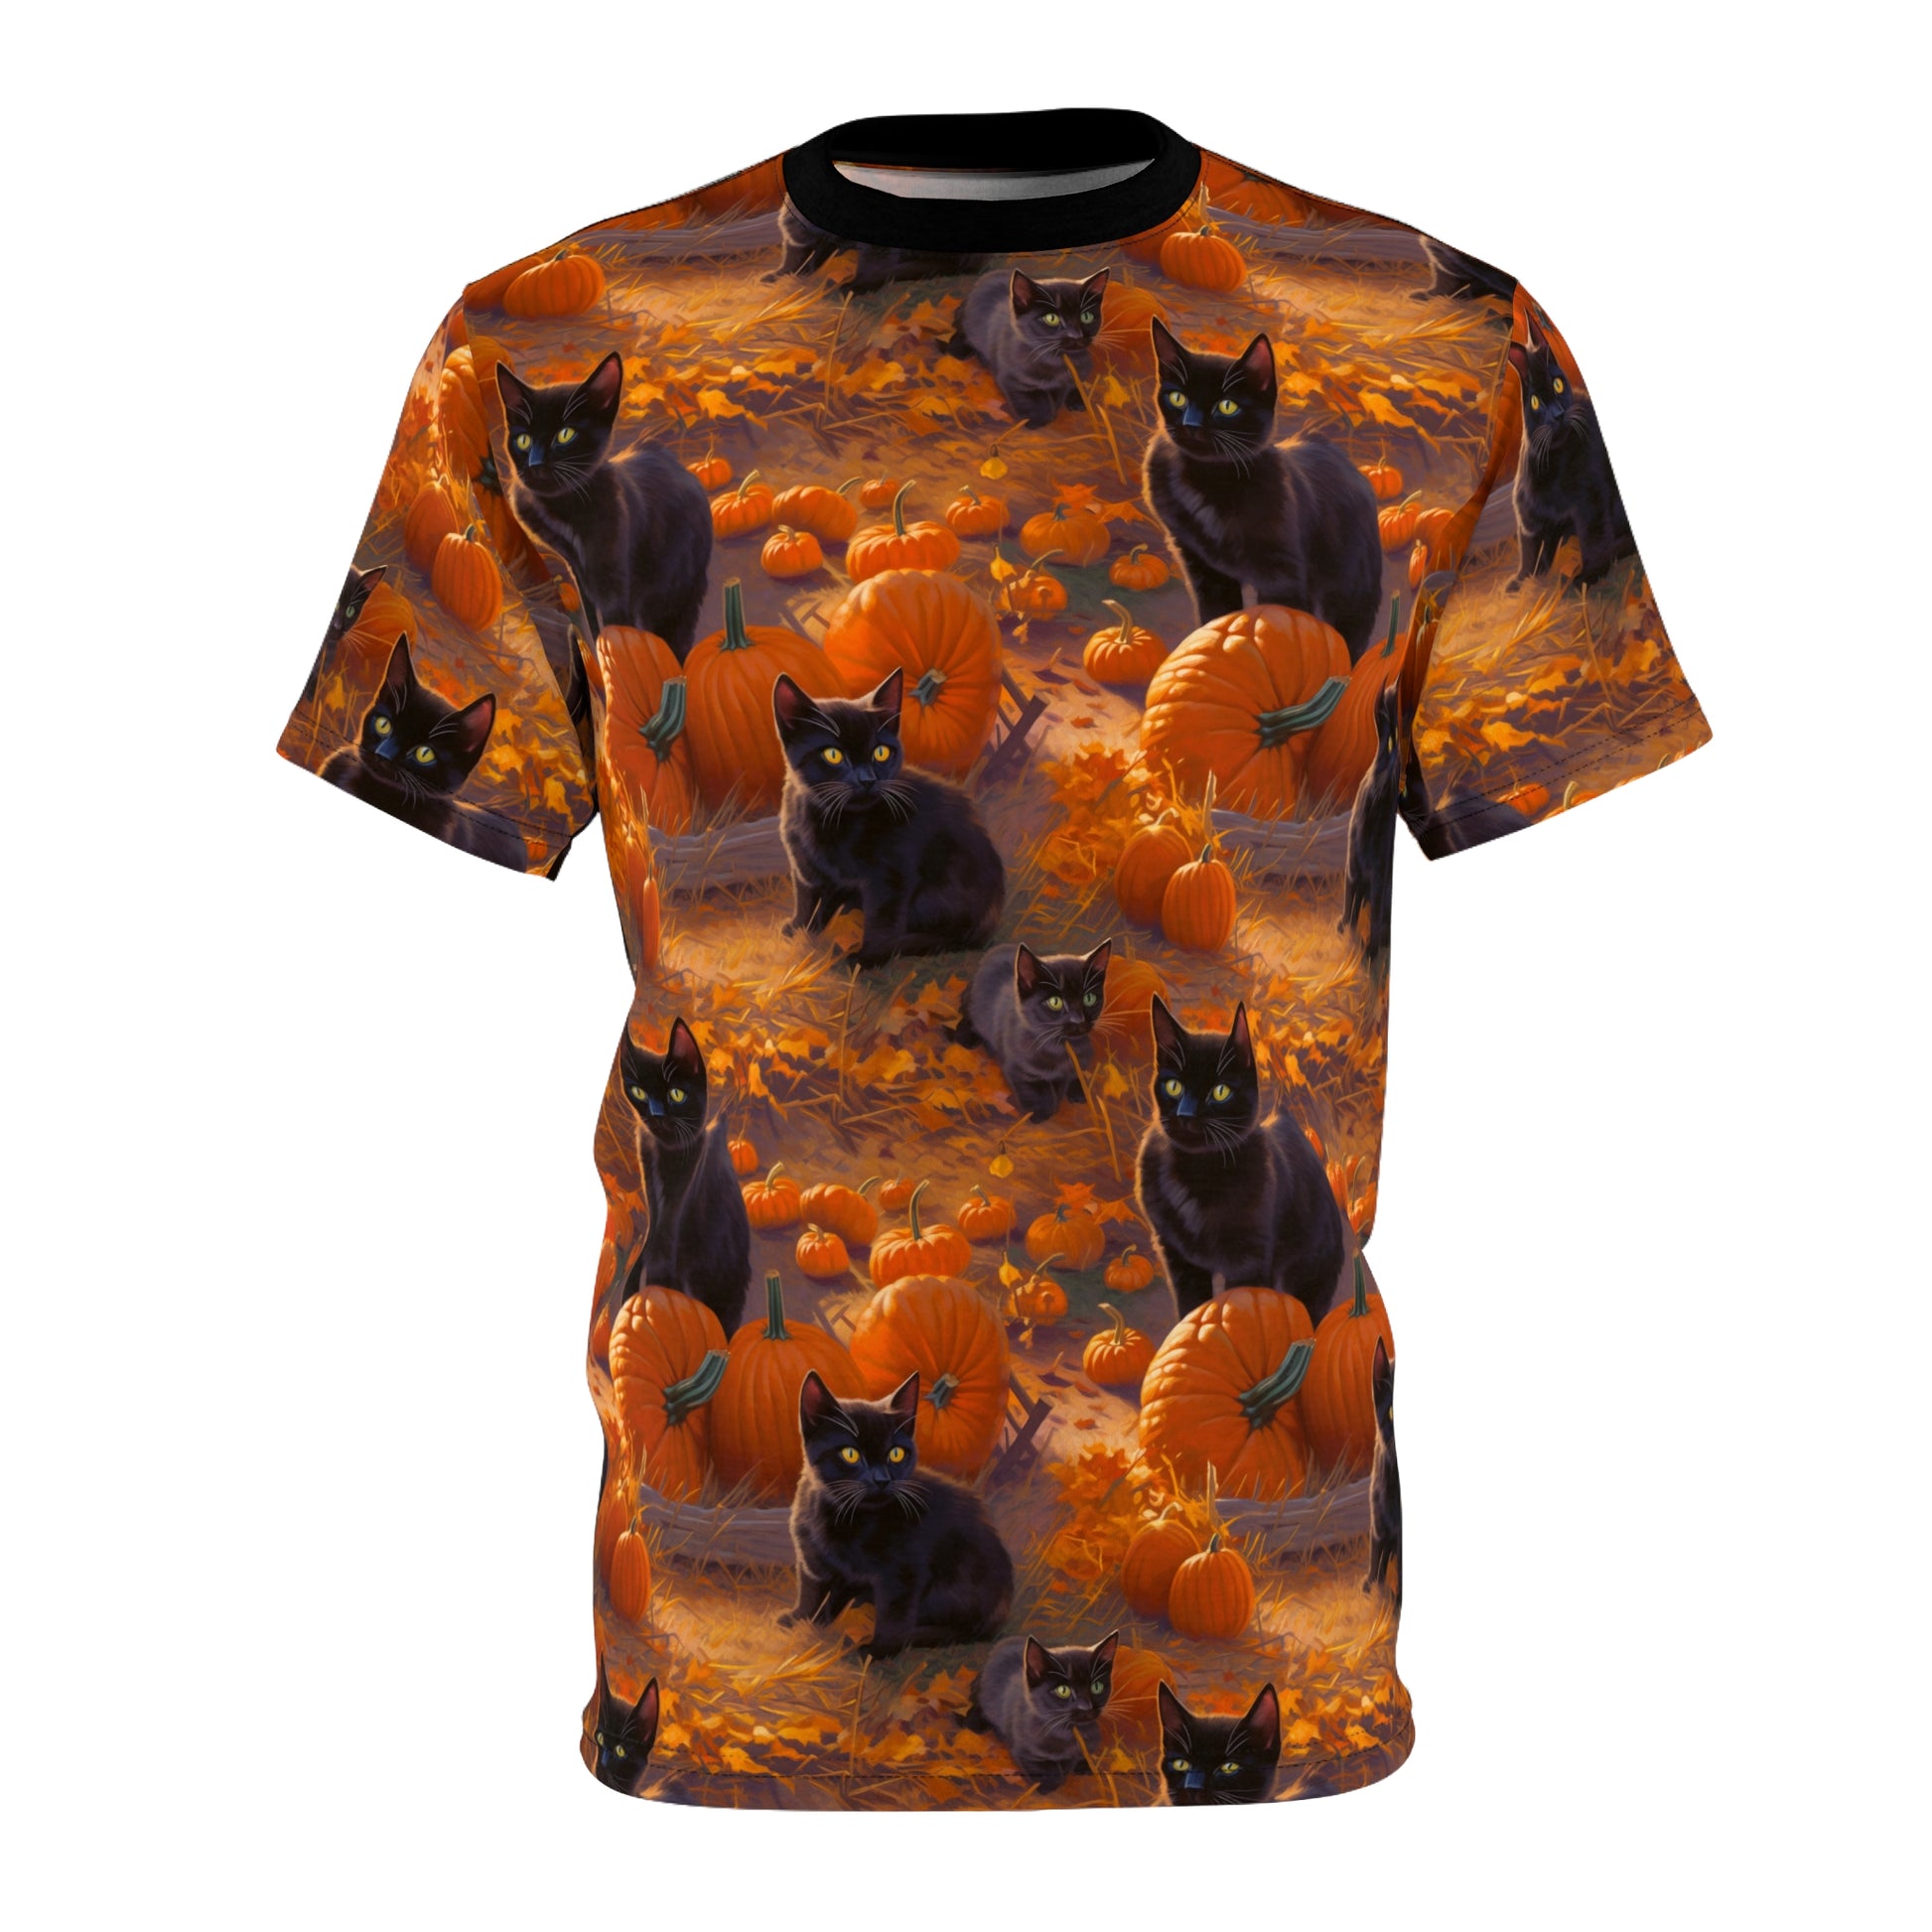 Black Cats in the Pumpkin Patch T-Shirt by Studio Ten Design